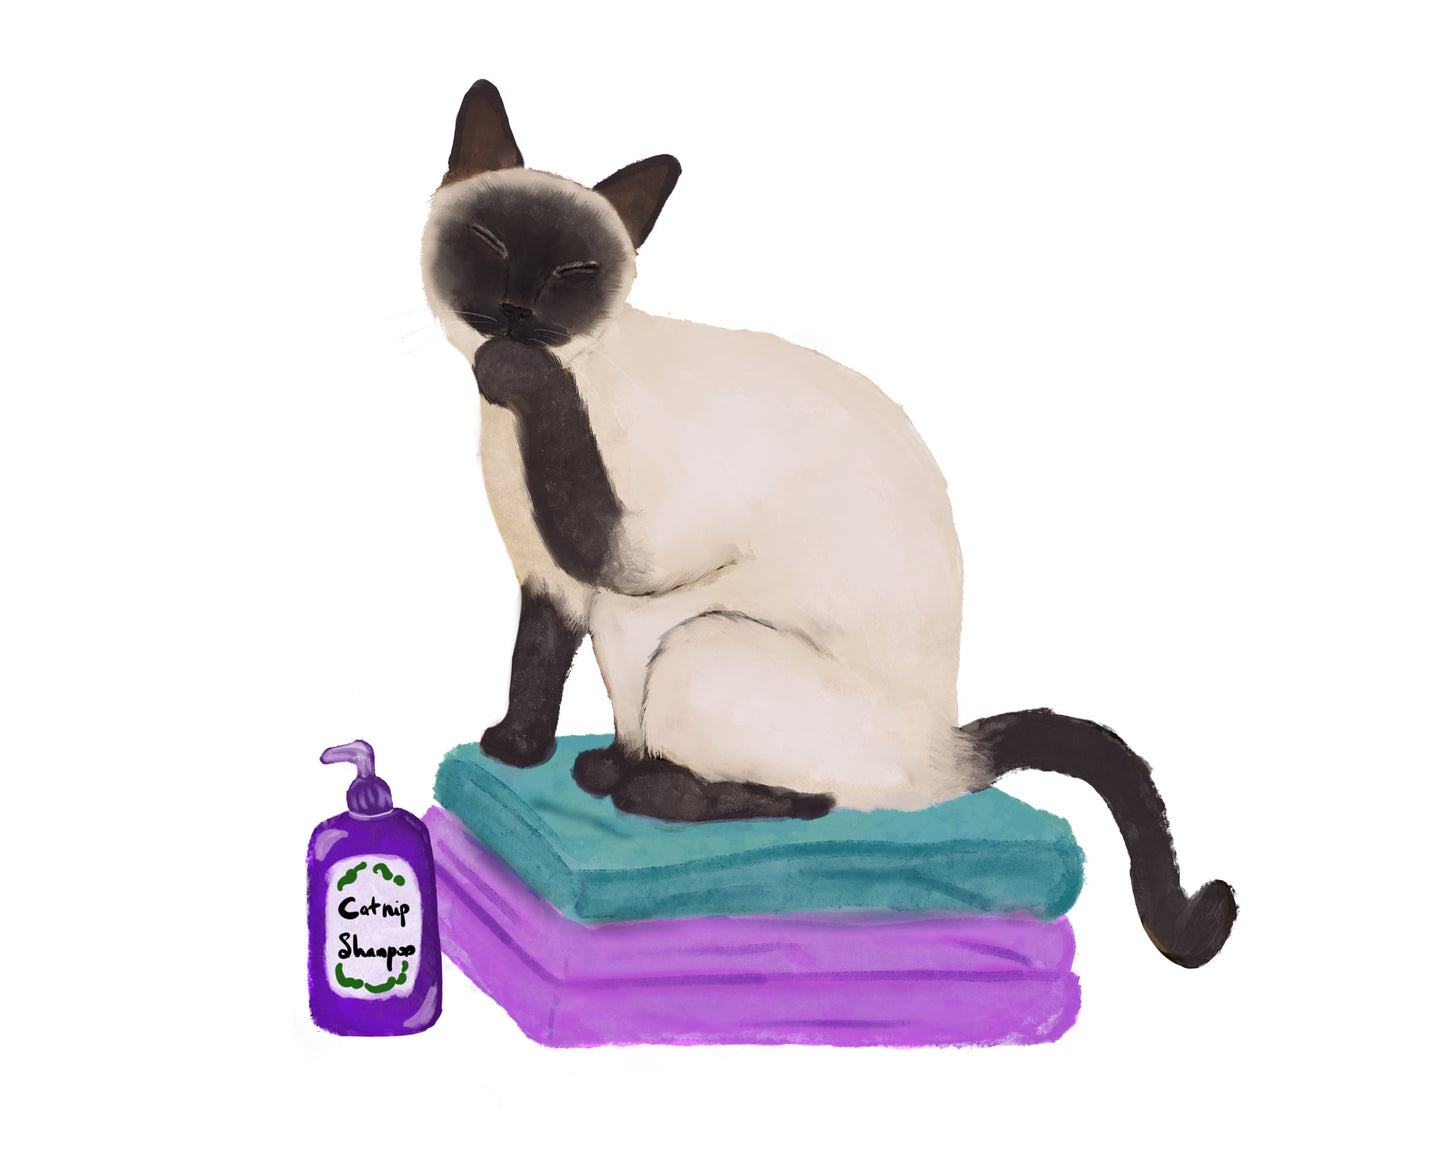 Siamese Cat on Laundry Print, Siamese Cat Sitting on Folded Linens, Laundry Wall Art, Cat Illustration, Home Decor, Cat Memorial